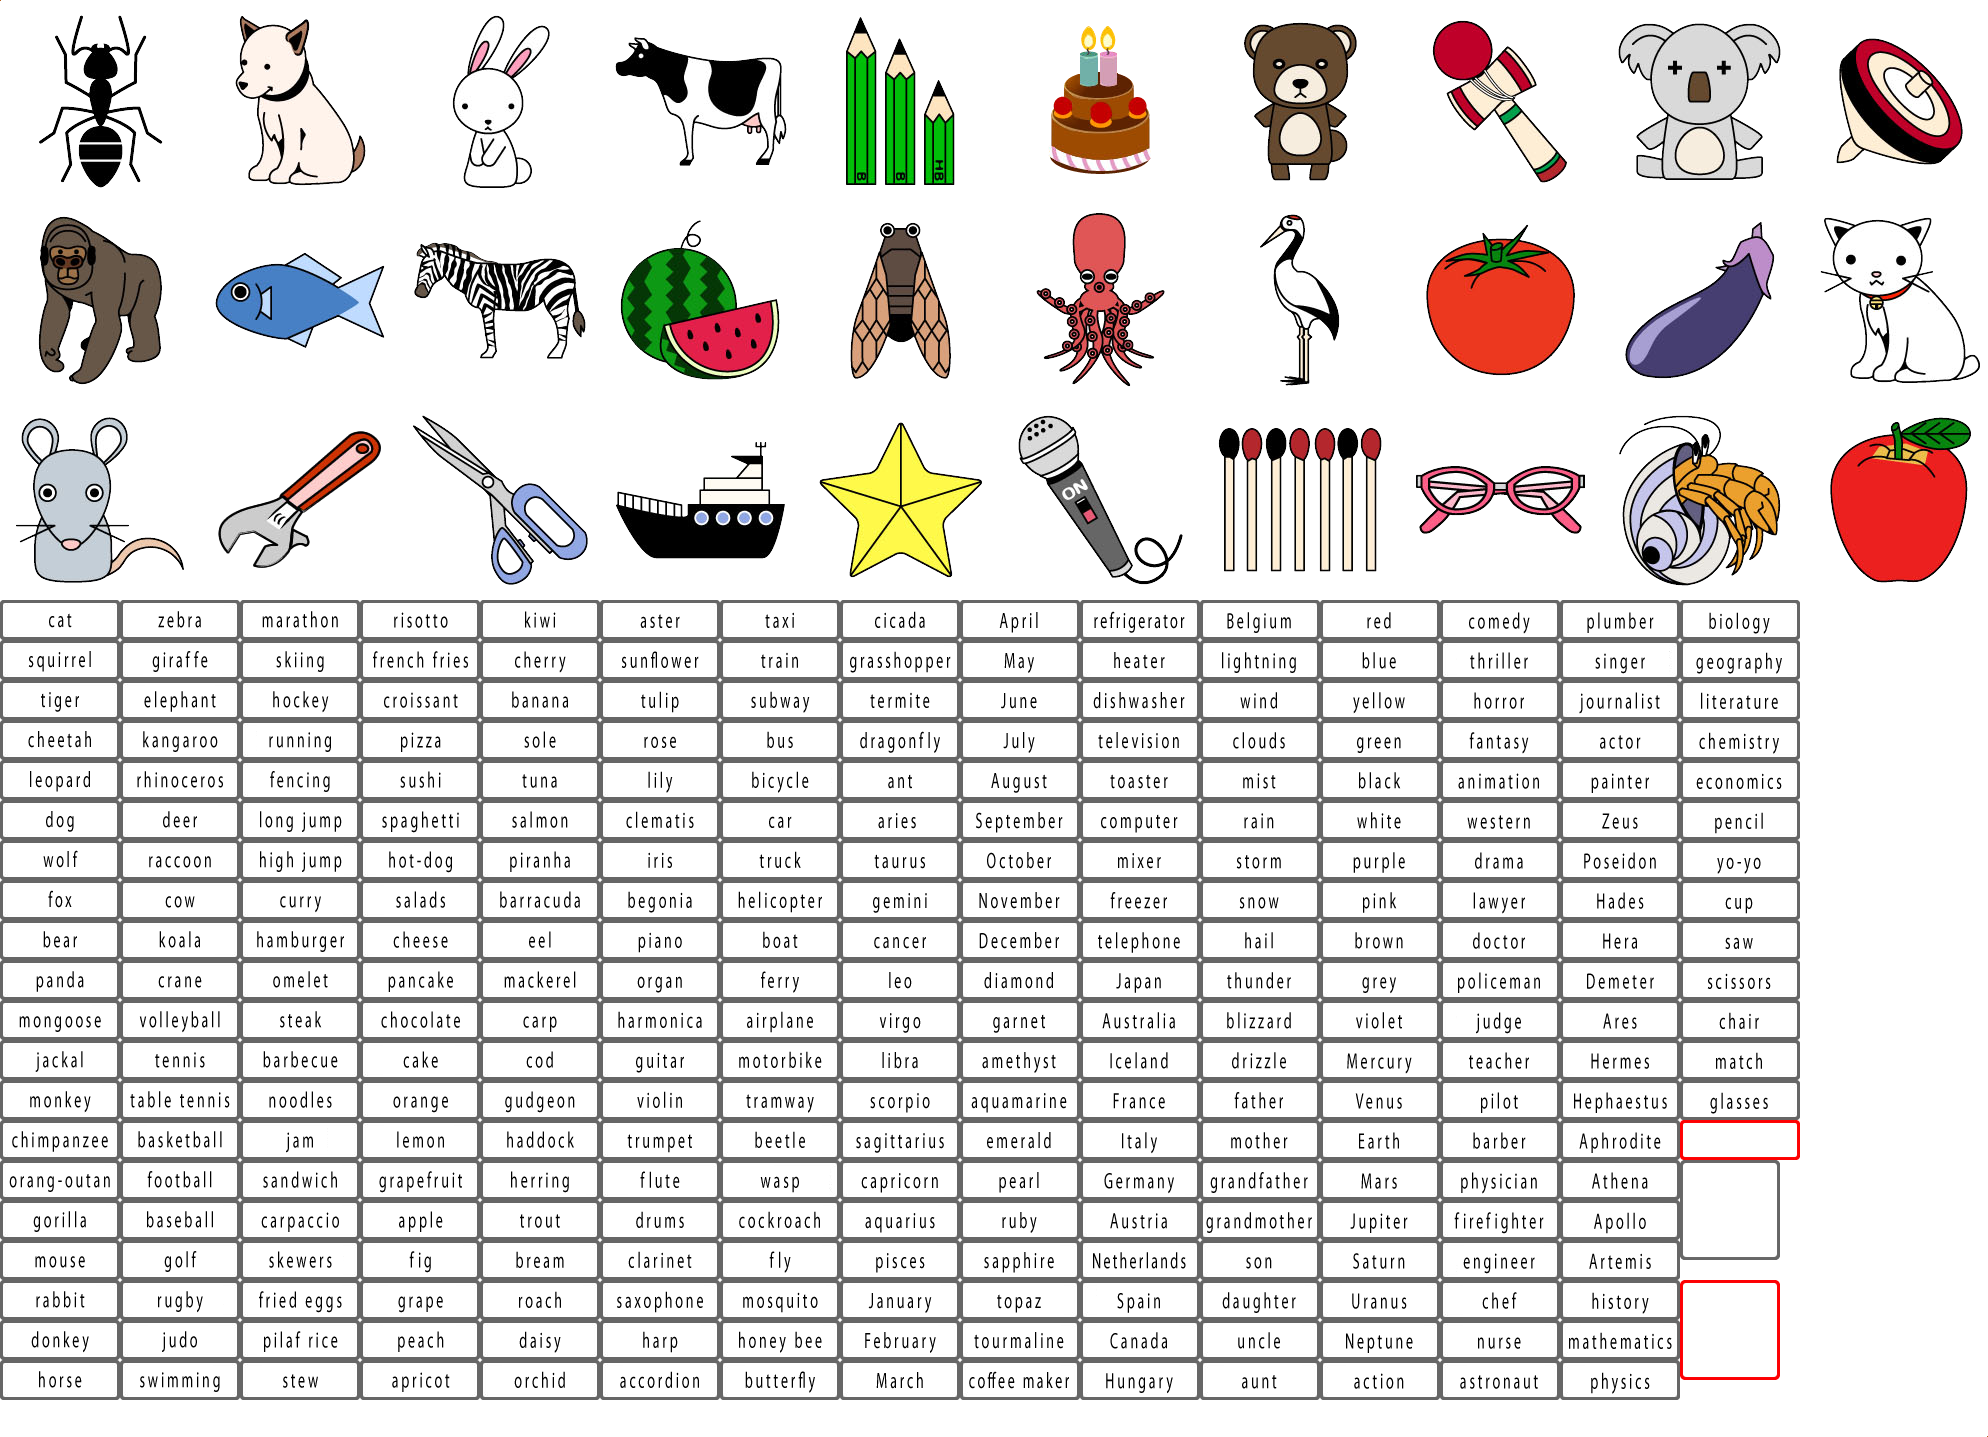 Objects (Category E)